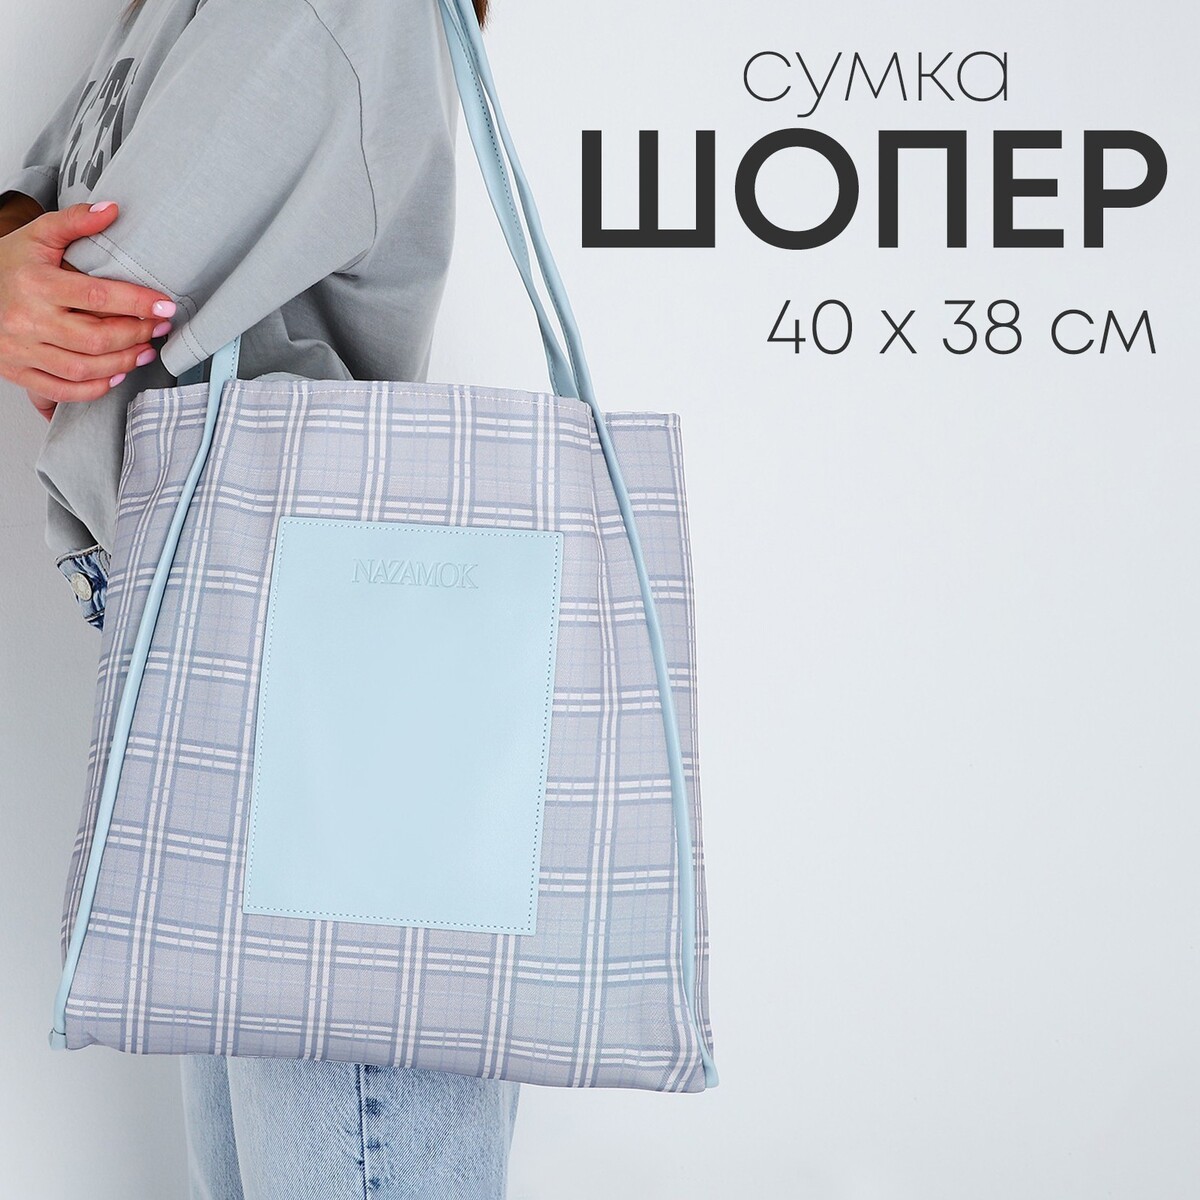 Сумка - шопер с нашивкой nazamok серый, 40×38×7 см сумка шопер с карманом toxic серый 40 х 35 см